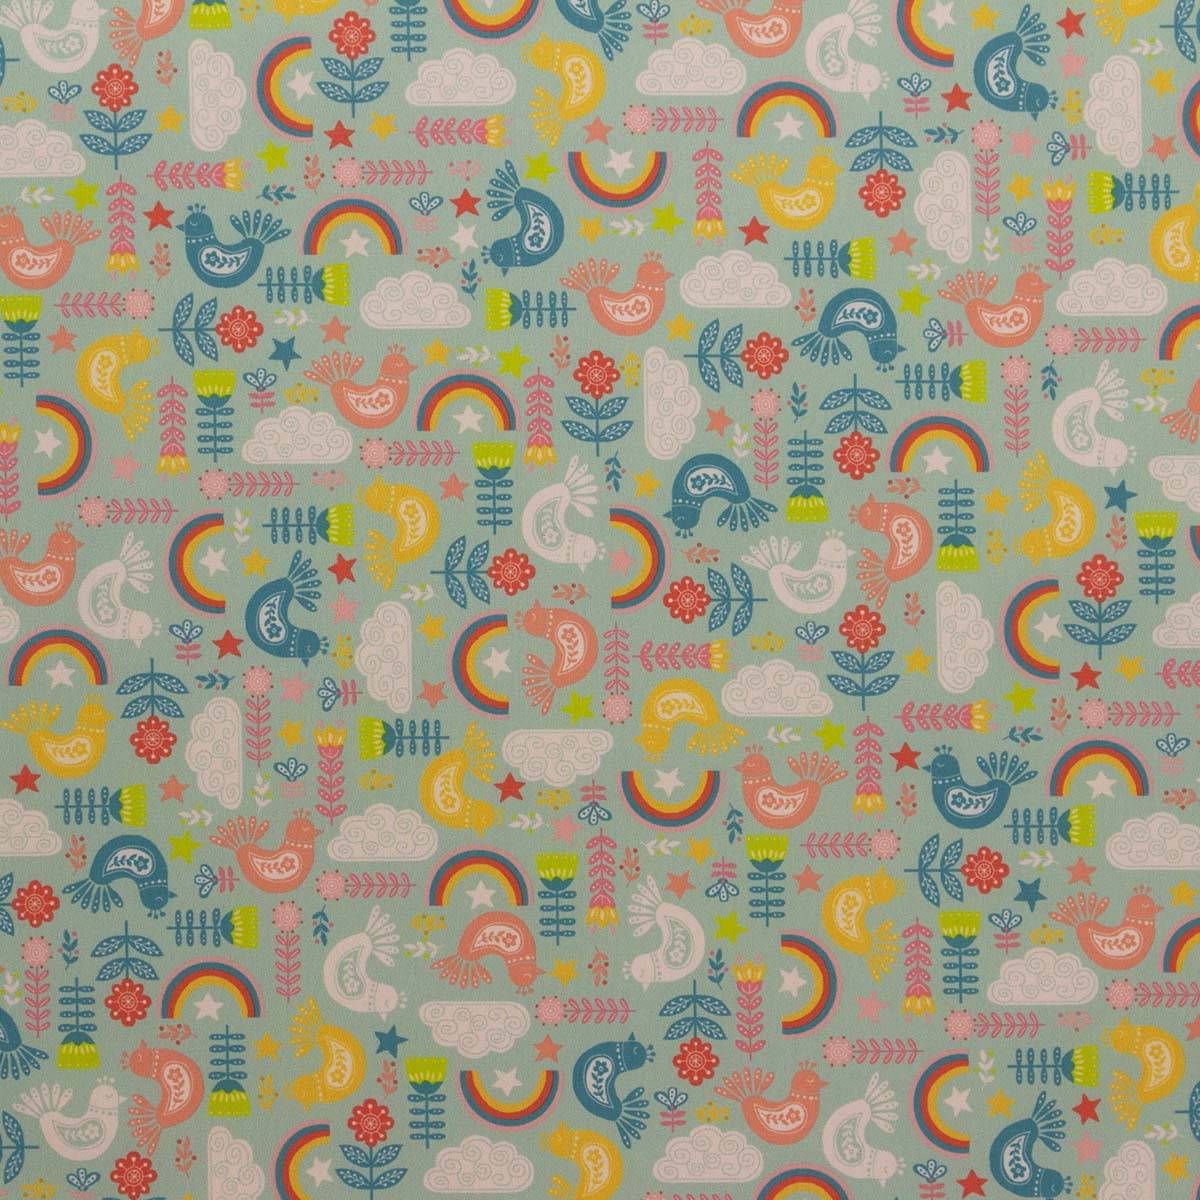 Tejido Softshell 3 capas  Arcoiris, Flores y Aves  Designed by Poppy  Celeste